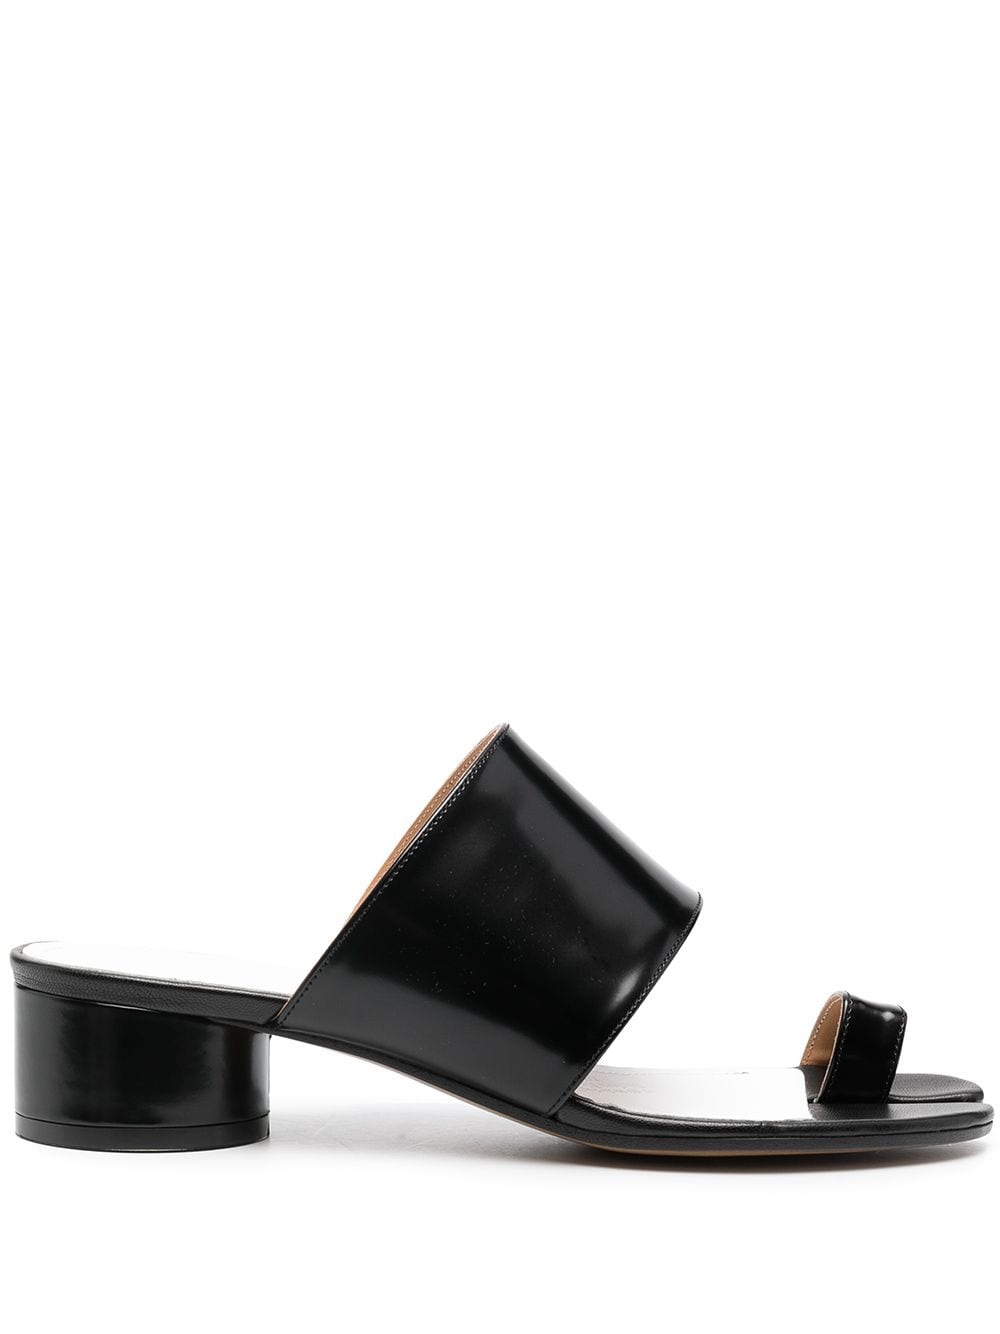 MAISON MARGIELA Shoes for Women | ModeSens